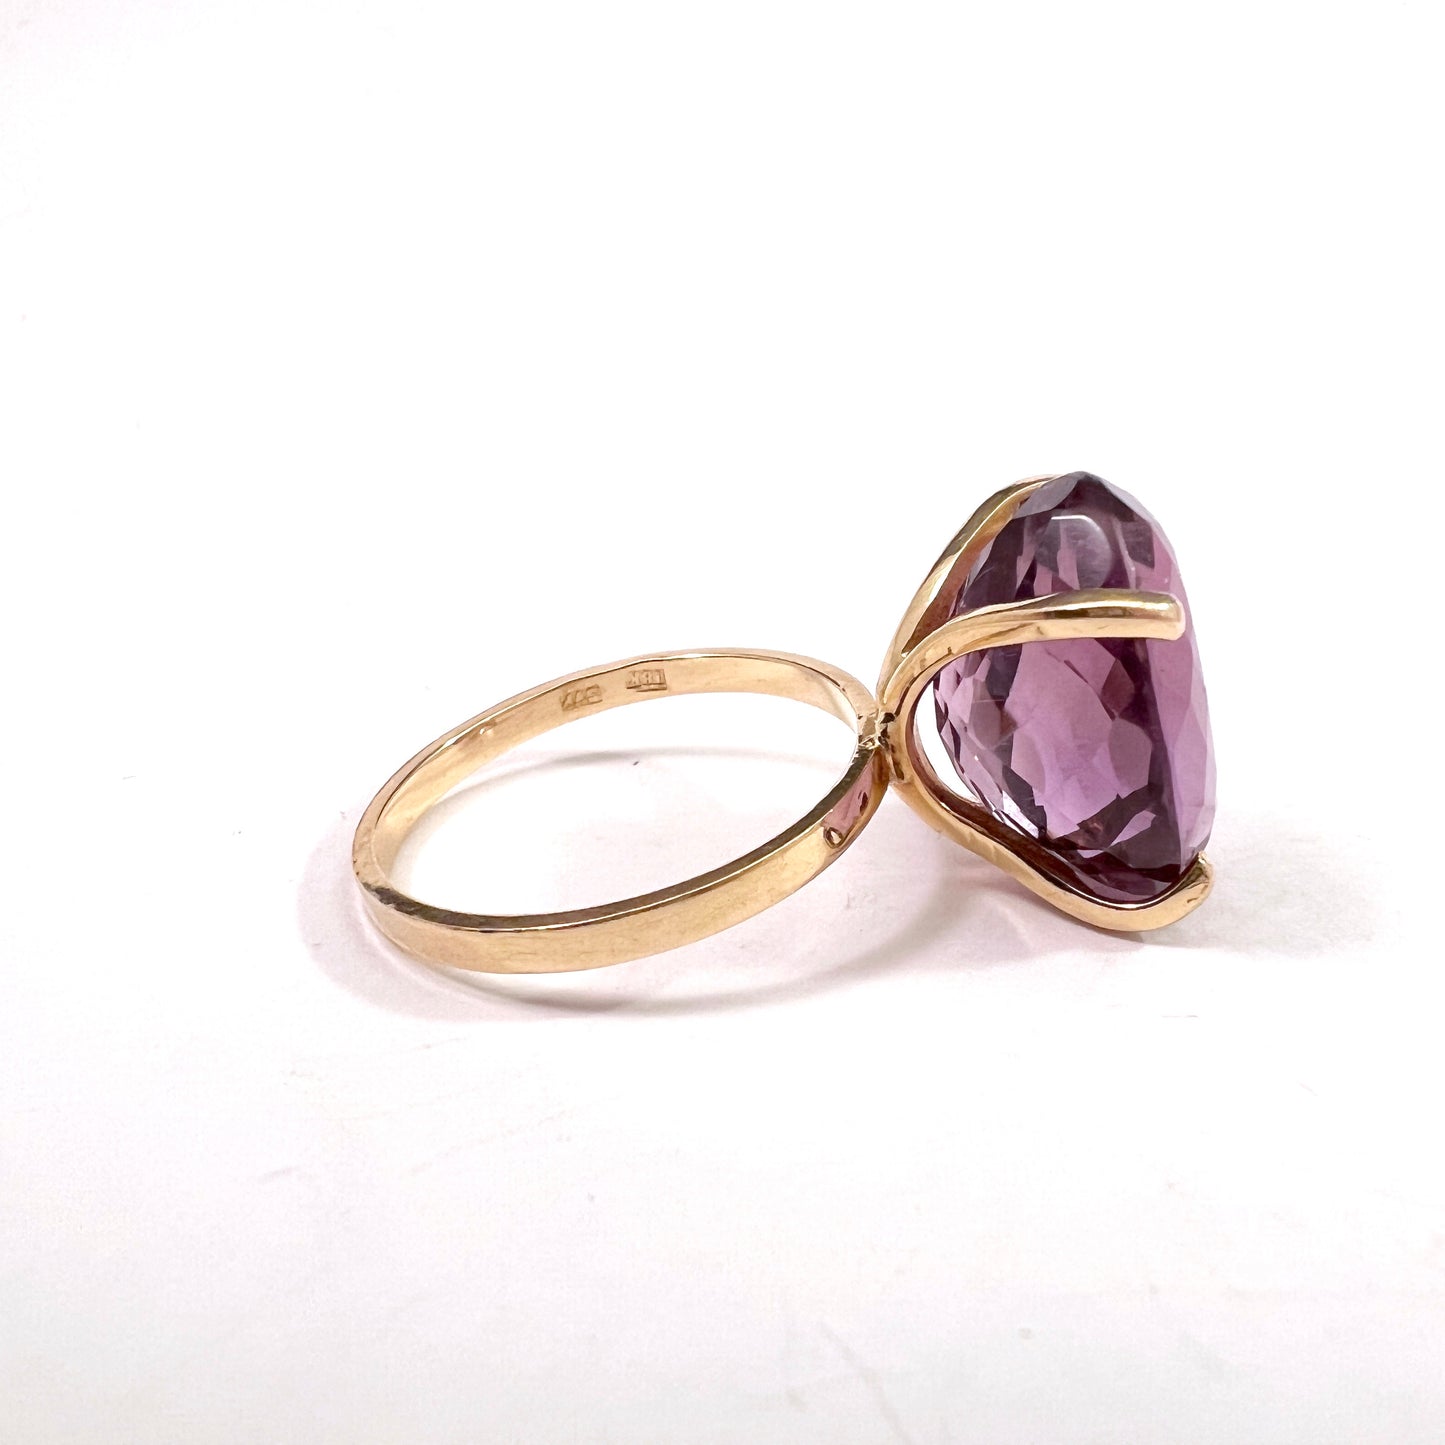 Vintage 18k Gold Amethyst Ring.